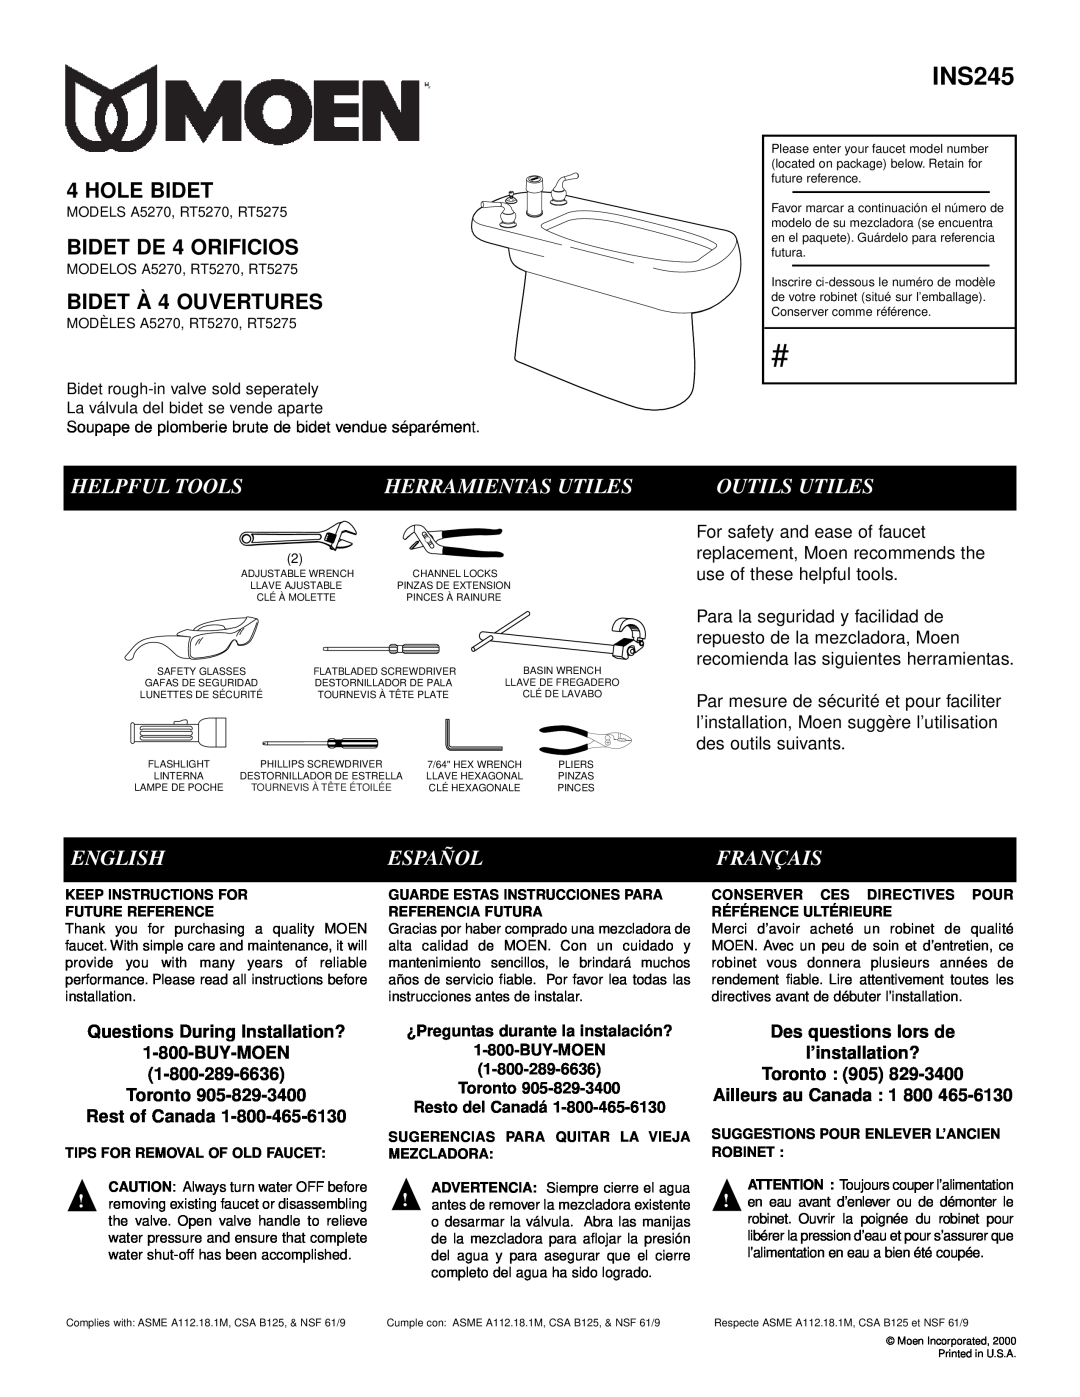 Moen RT5270 manual Helpful Tools, Outils Utiles, English, Español, Français, INS245, Hole Bidet, BIDET DE 4 ORIFICIOS 